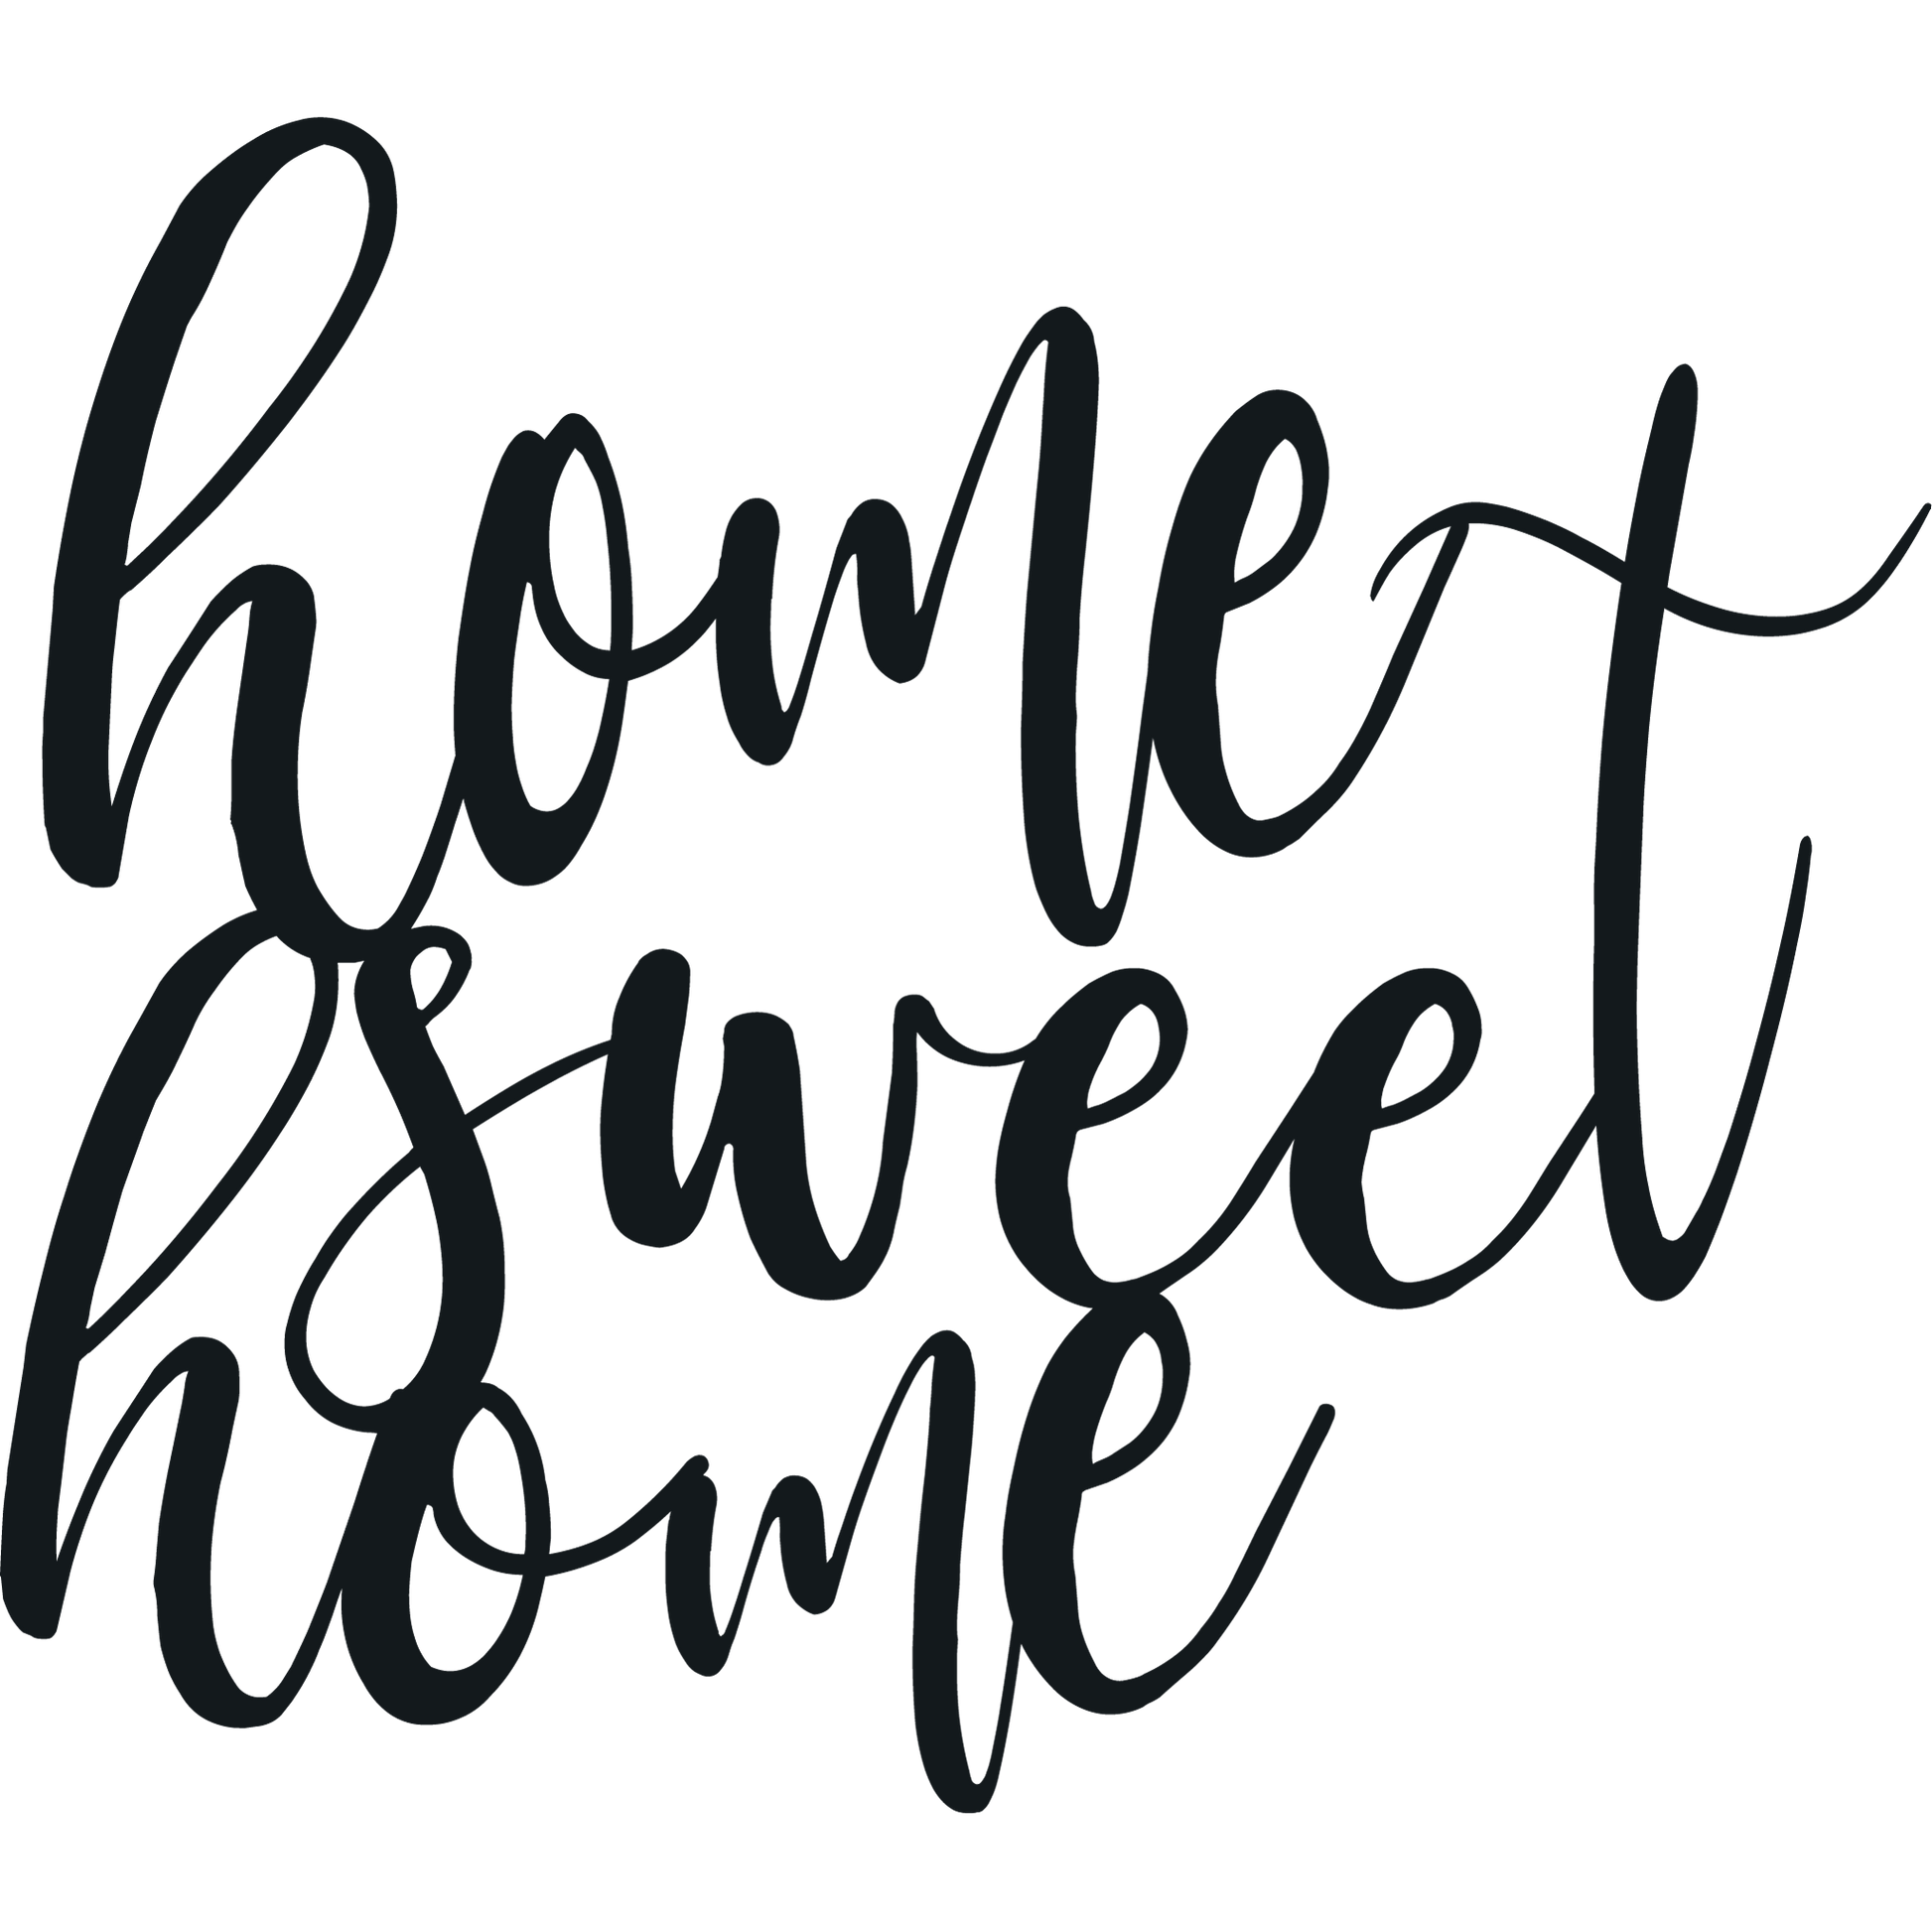 Home Sweet Home - Metal Wall Art - Badger Steel USA